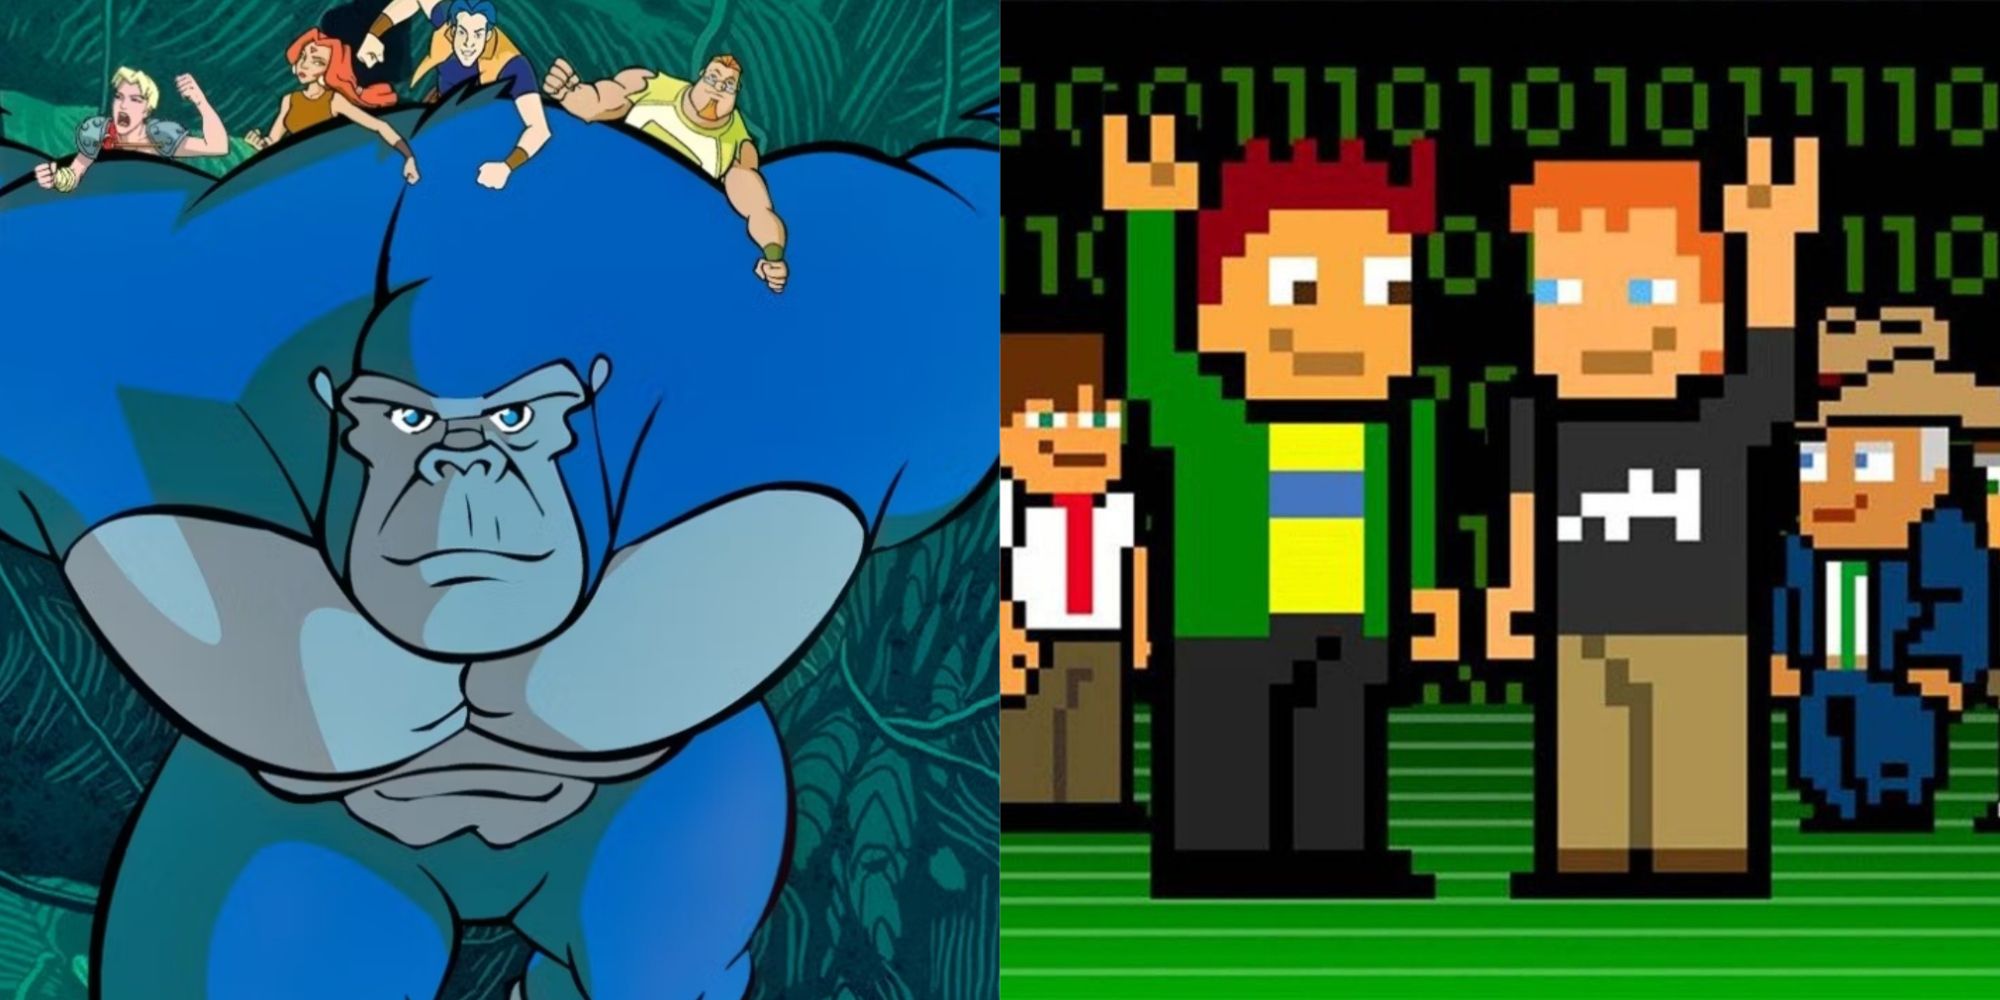 Split image of Kong the Animated Series and Code Monkeys